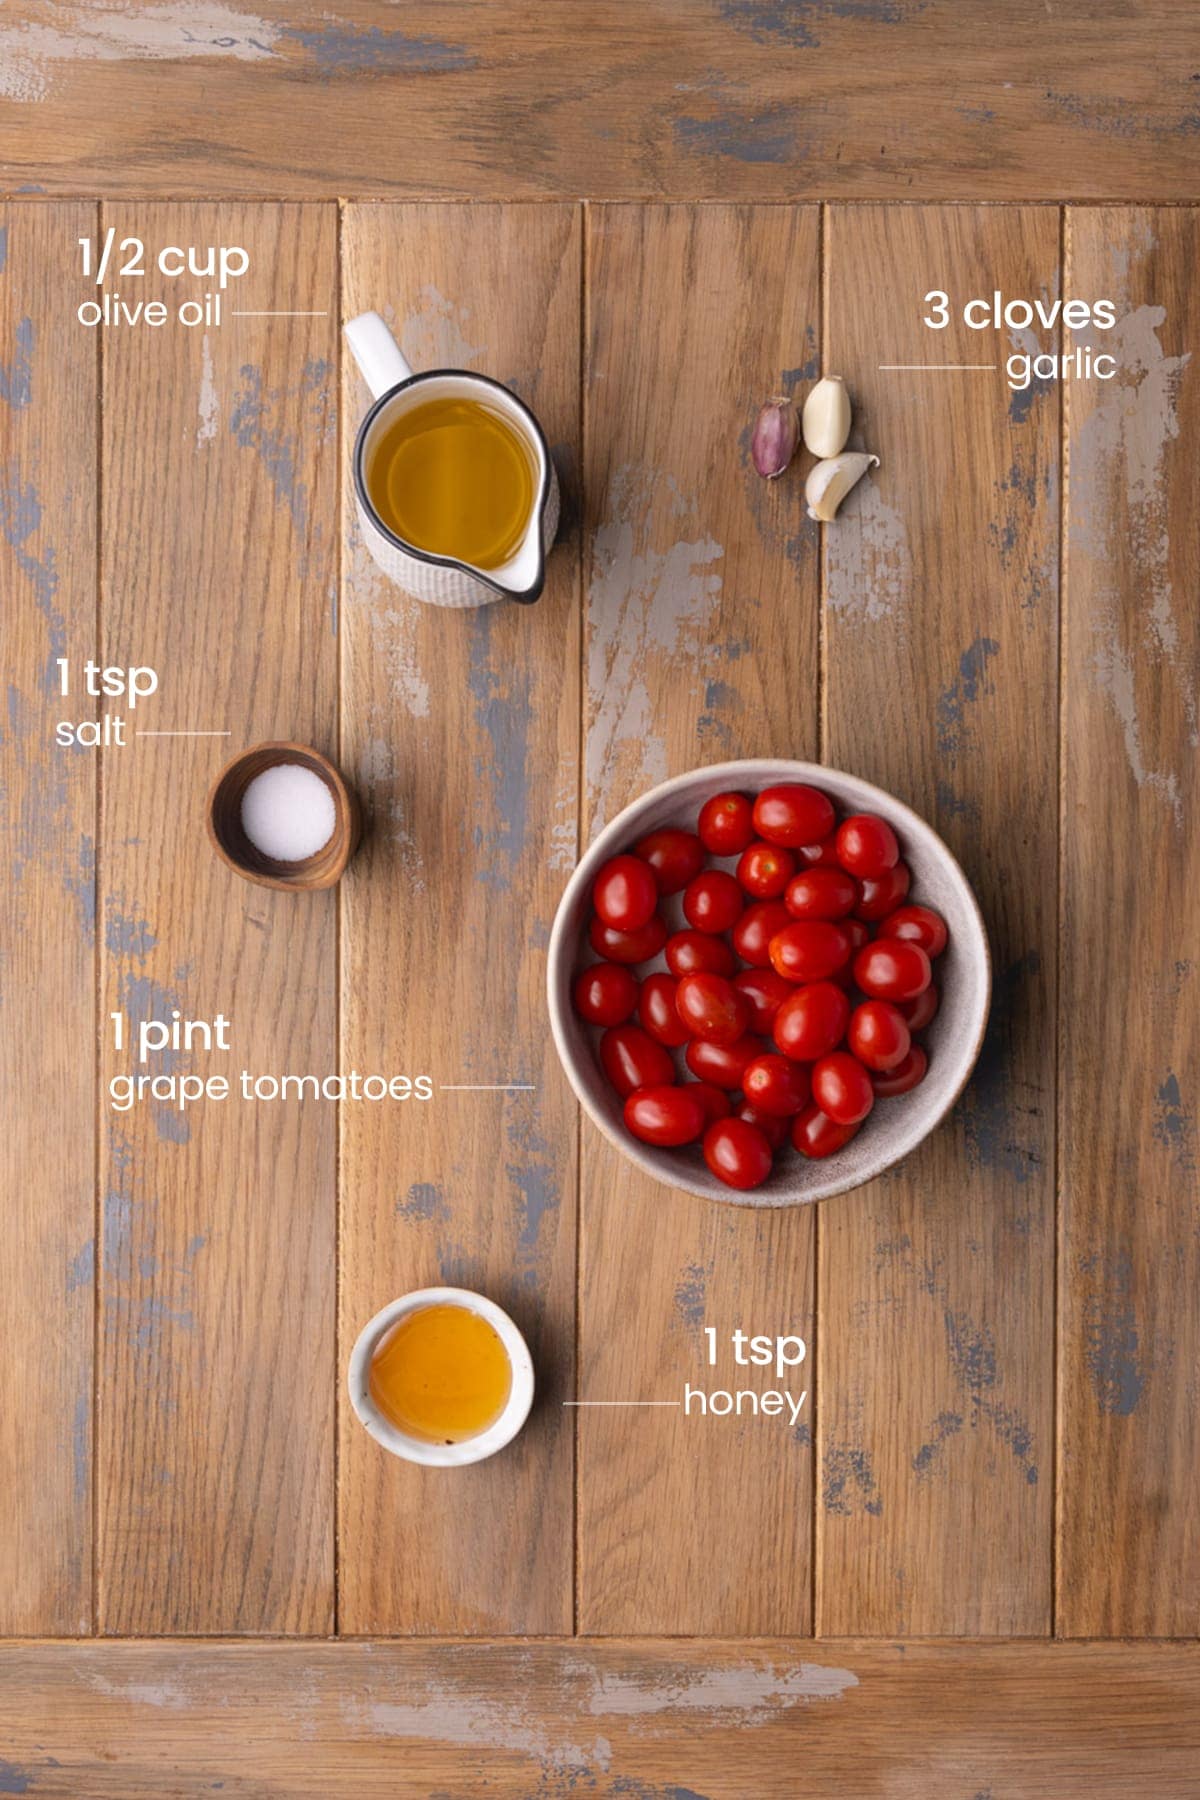 Ingredients for grape tomato confit - tomatoes, garlic, olive oil, salt, honey